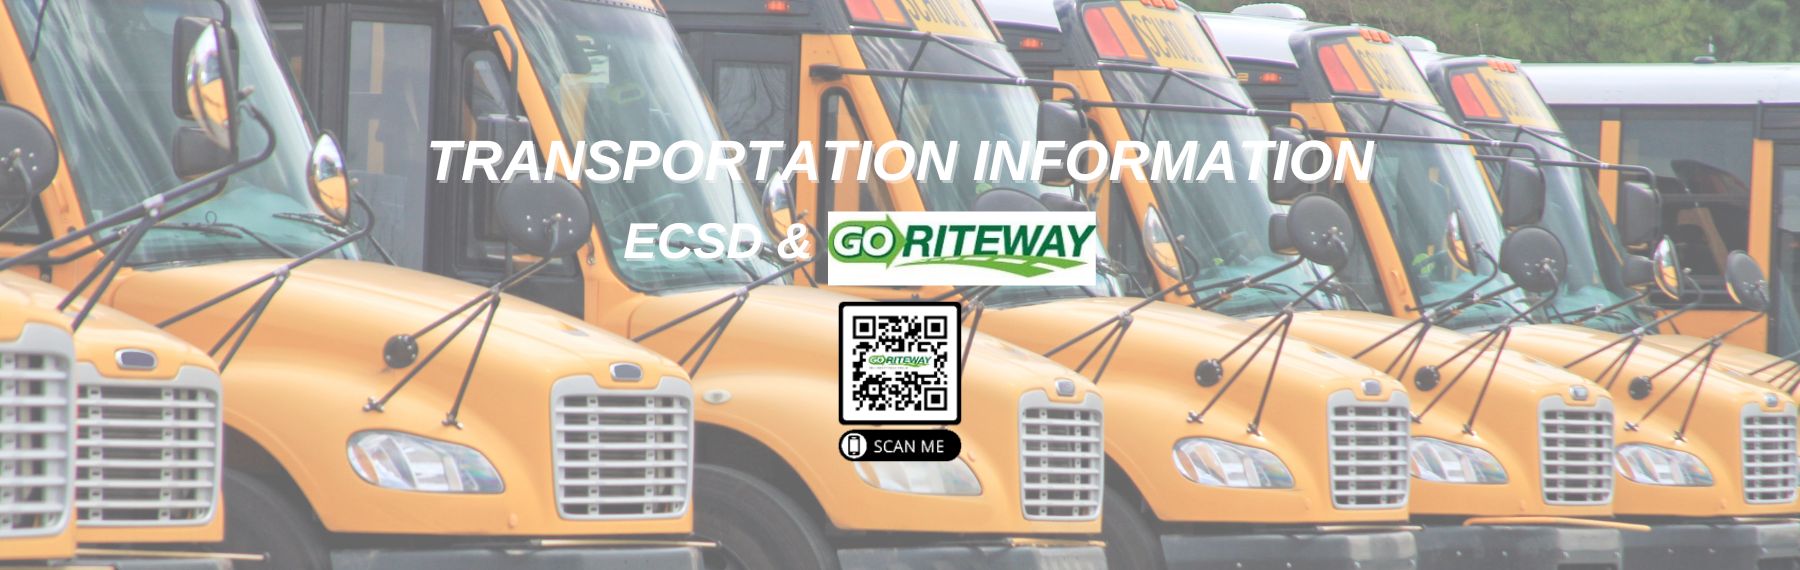 Transportation page banner